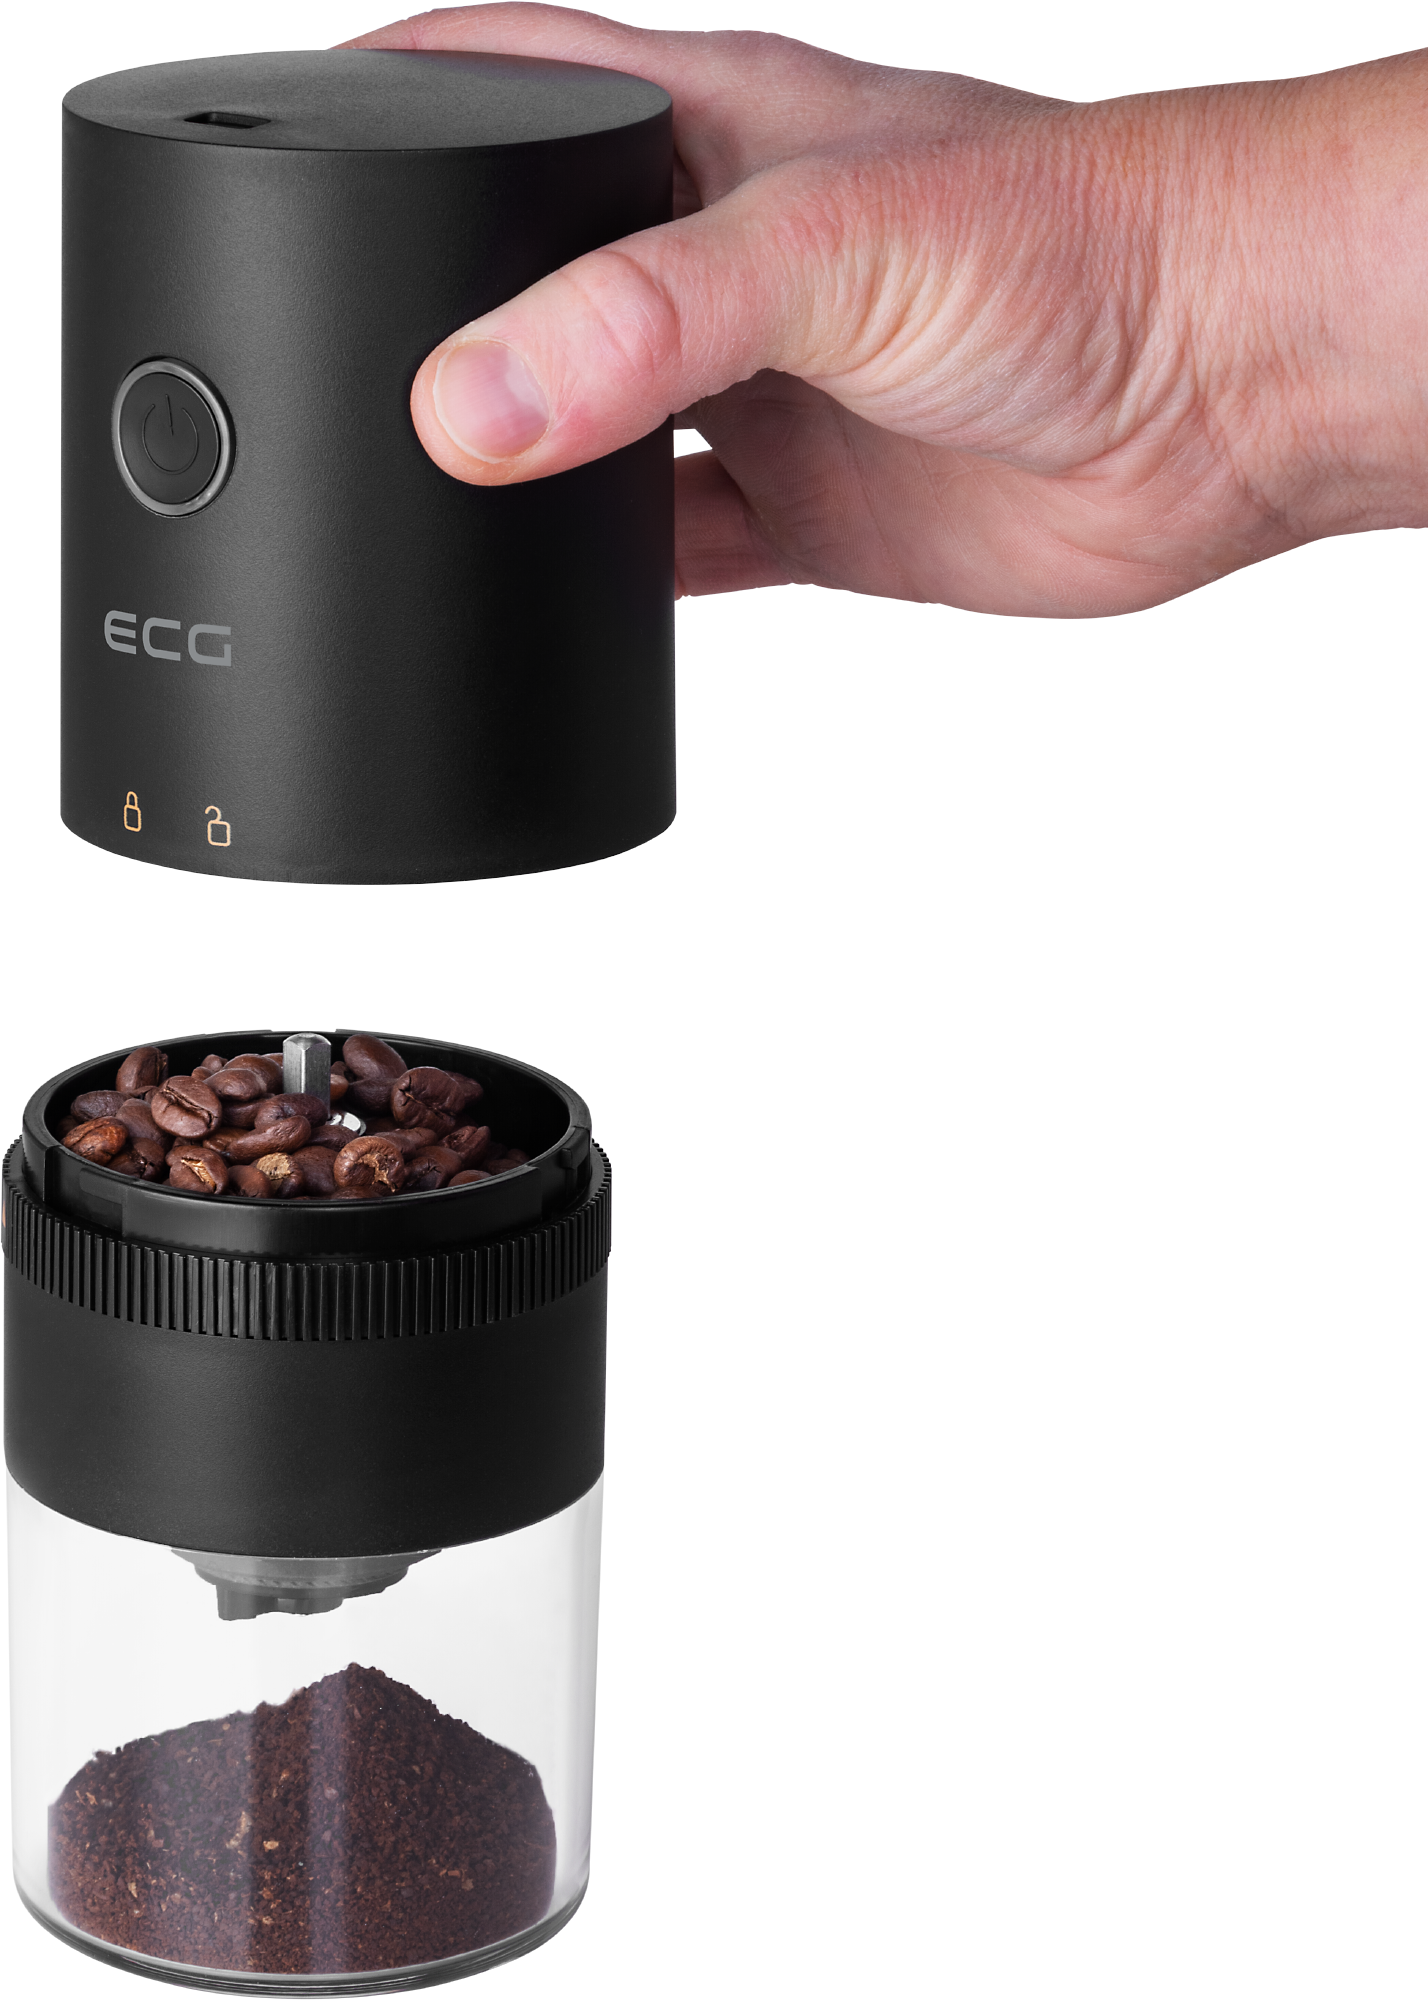 Кофемолка ECG KM150 Minimo Black характеристики - фотография 7